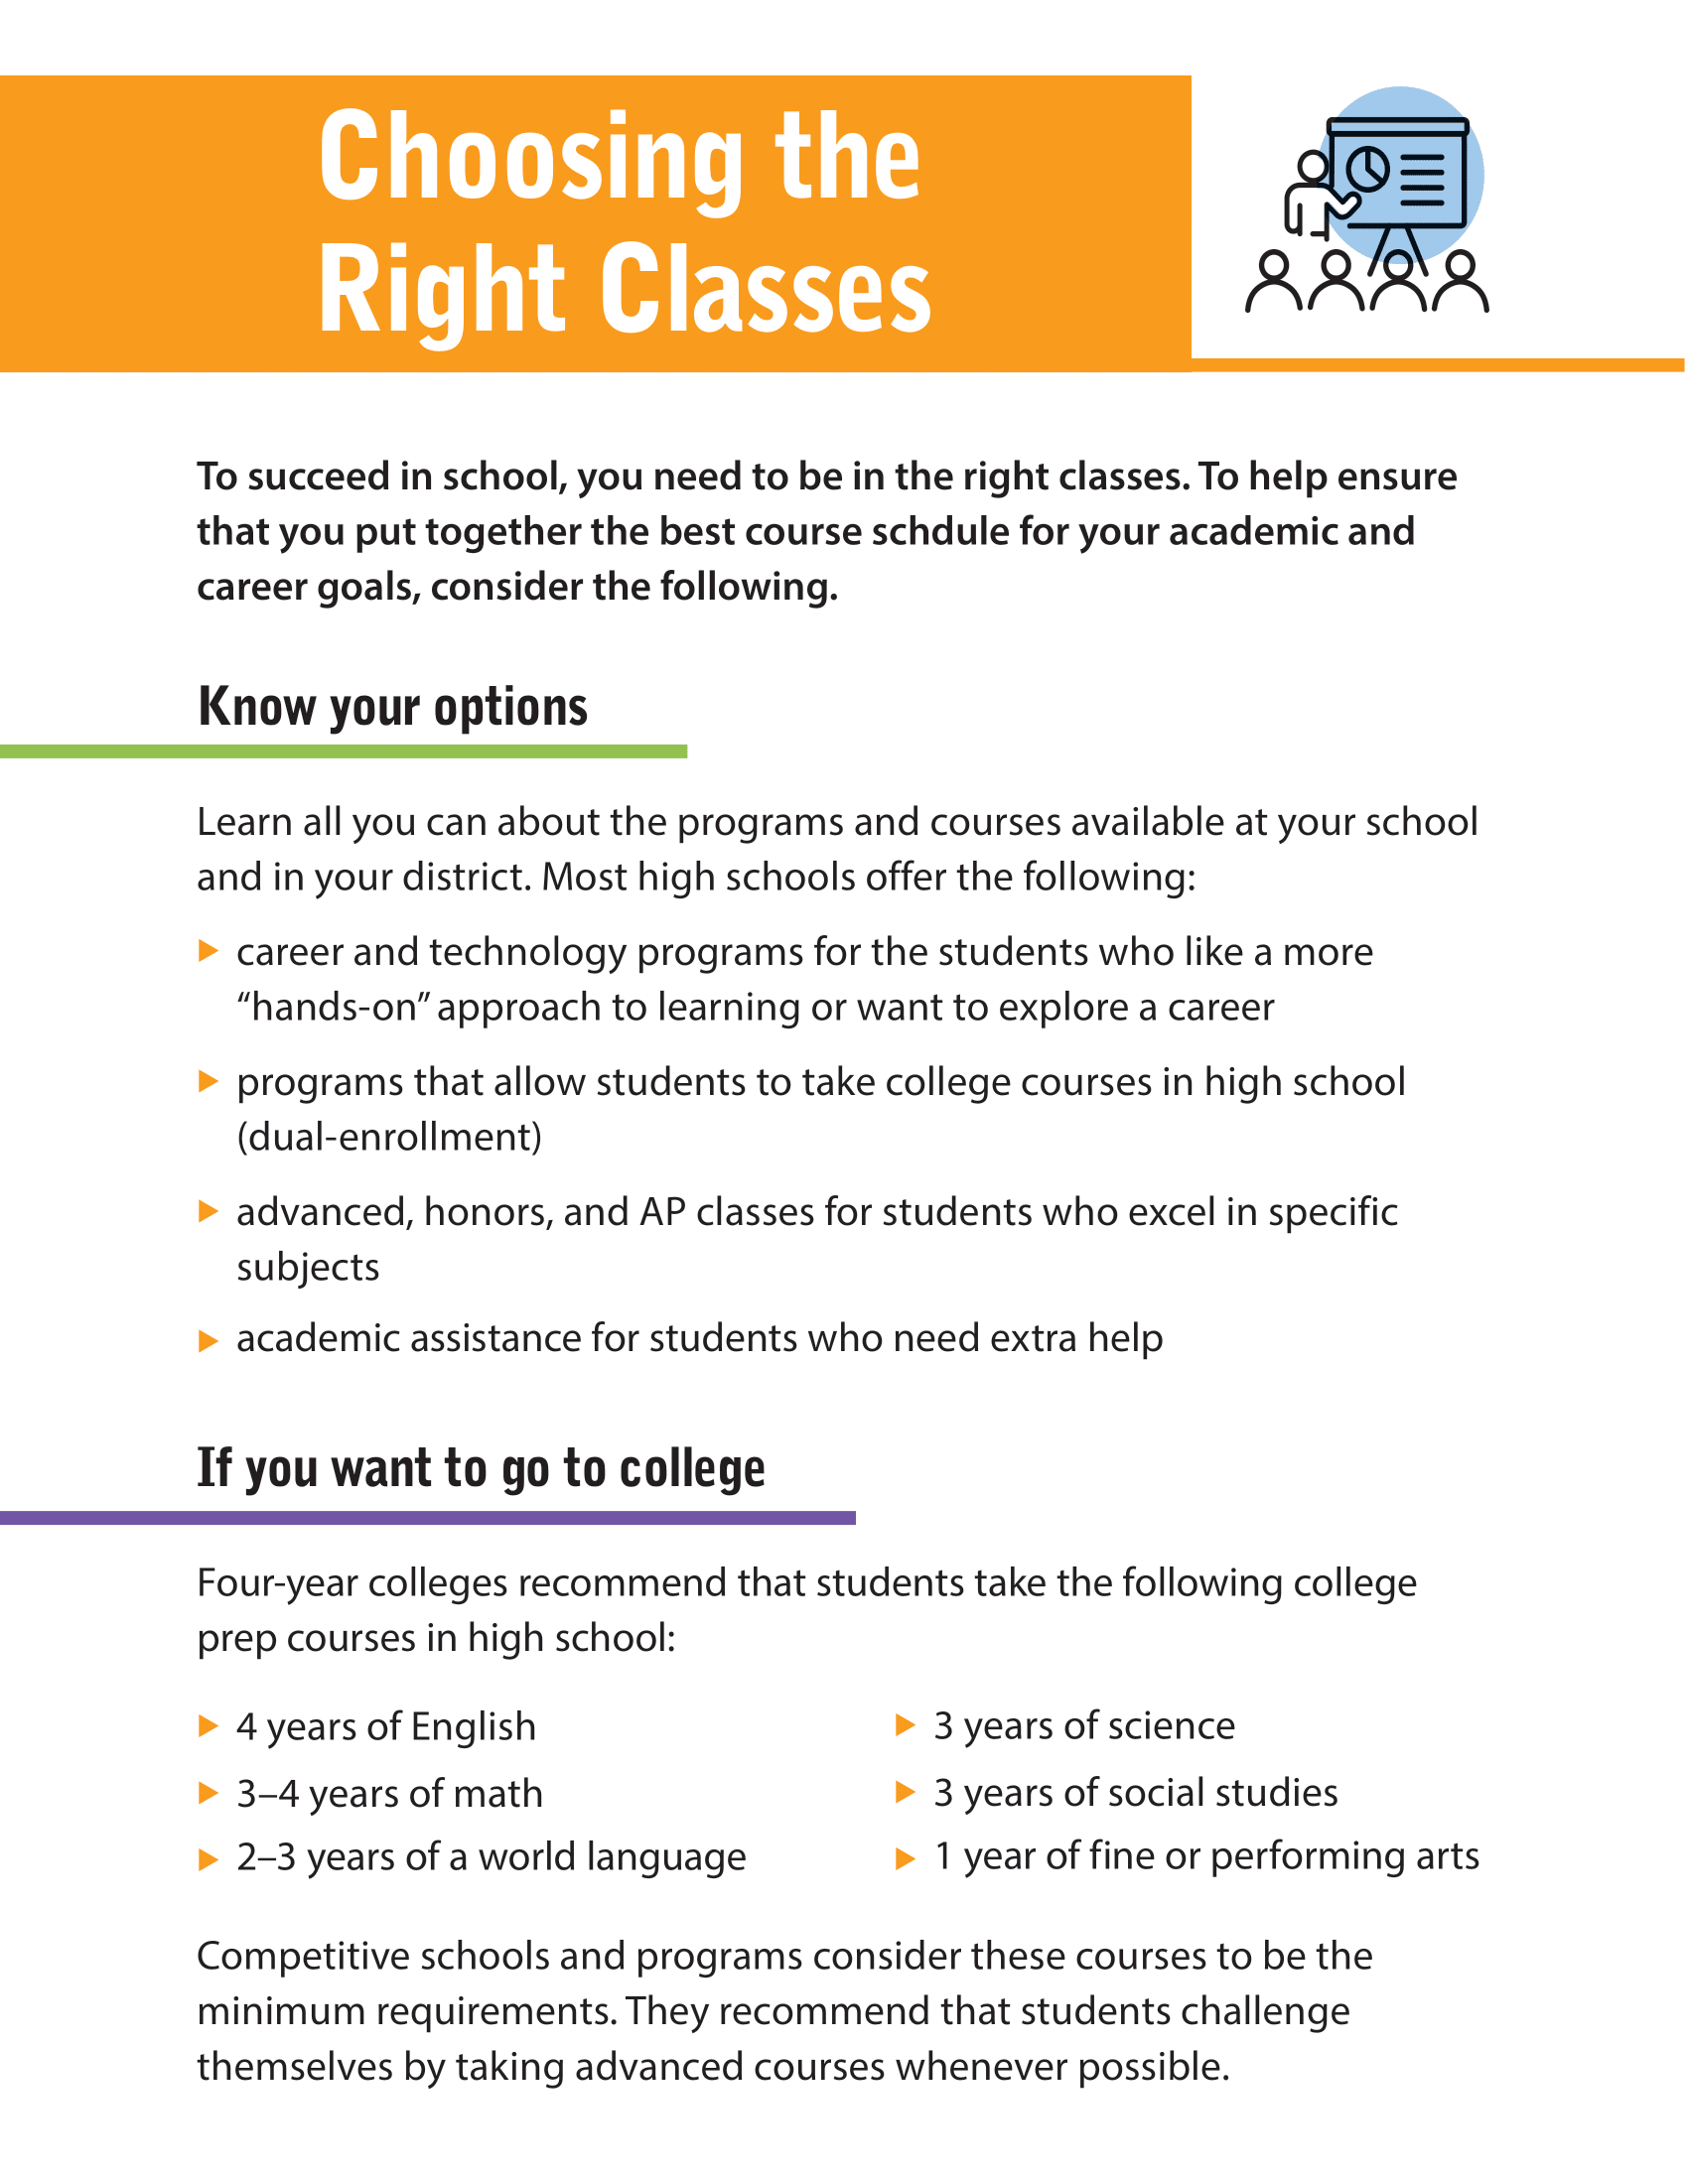 Choosing the Right Classes